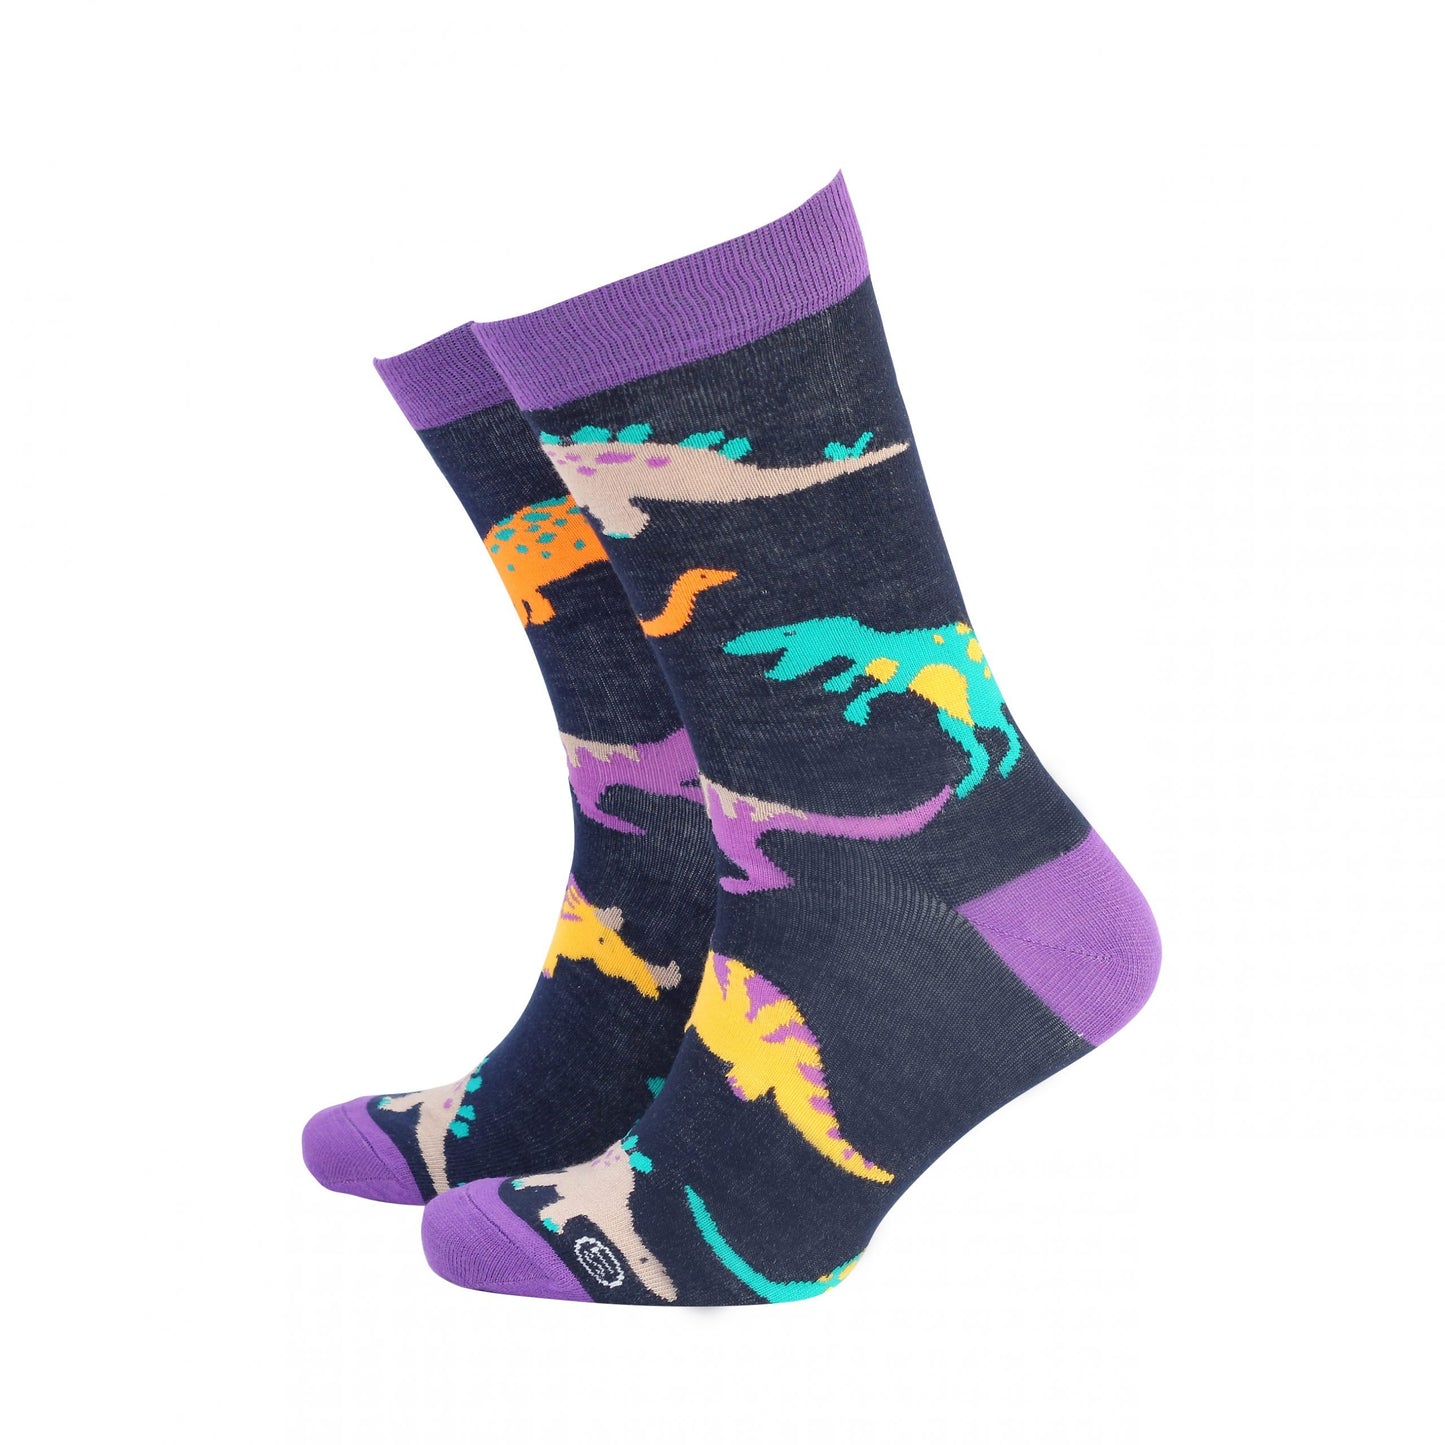 Dinosaur (Men's) Socks